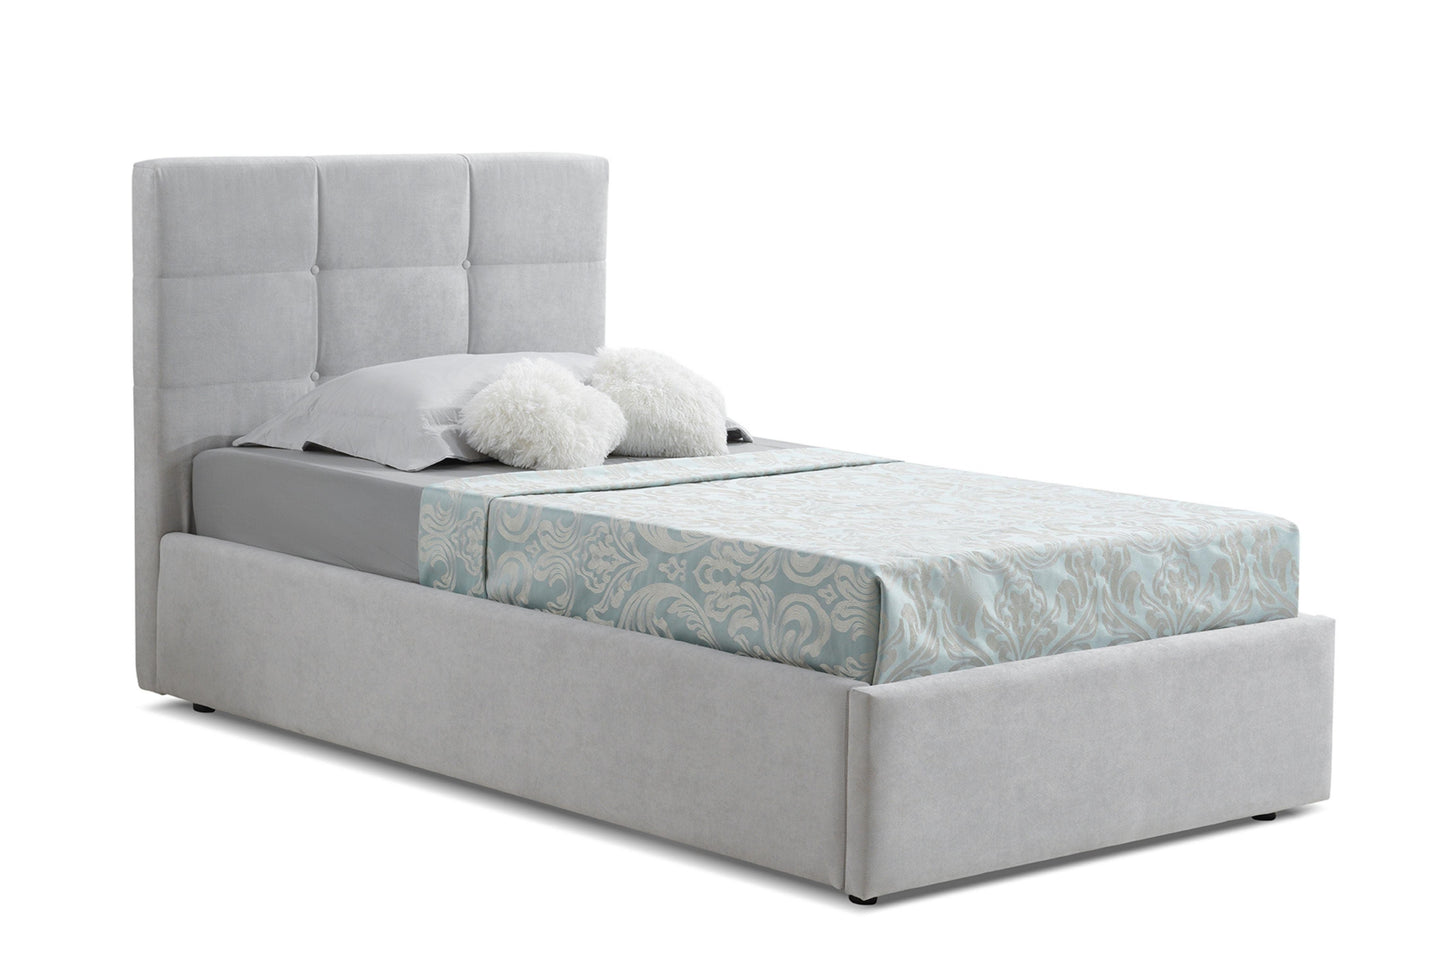 Mario Full, XL Twin Bed Gray Fabric Model CB-A10 - Venini Furniture 